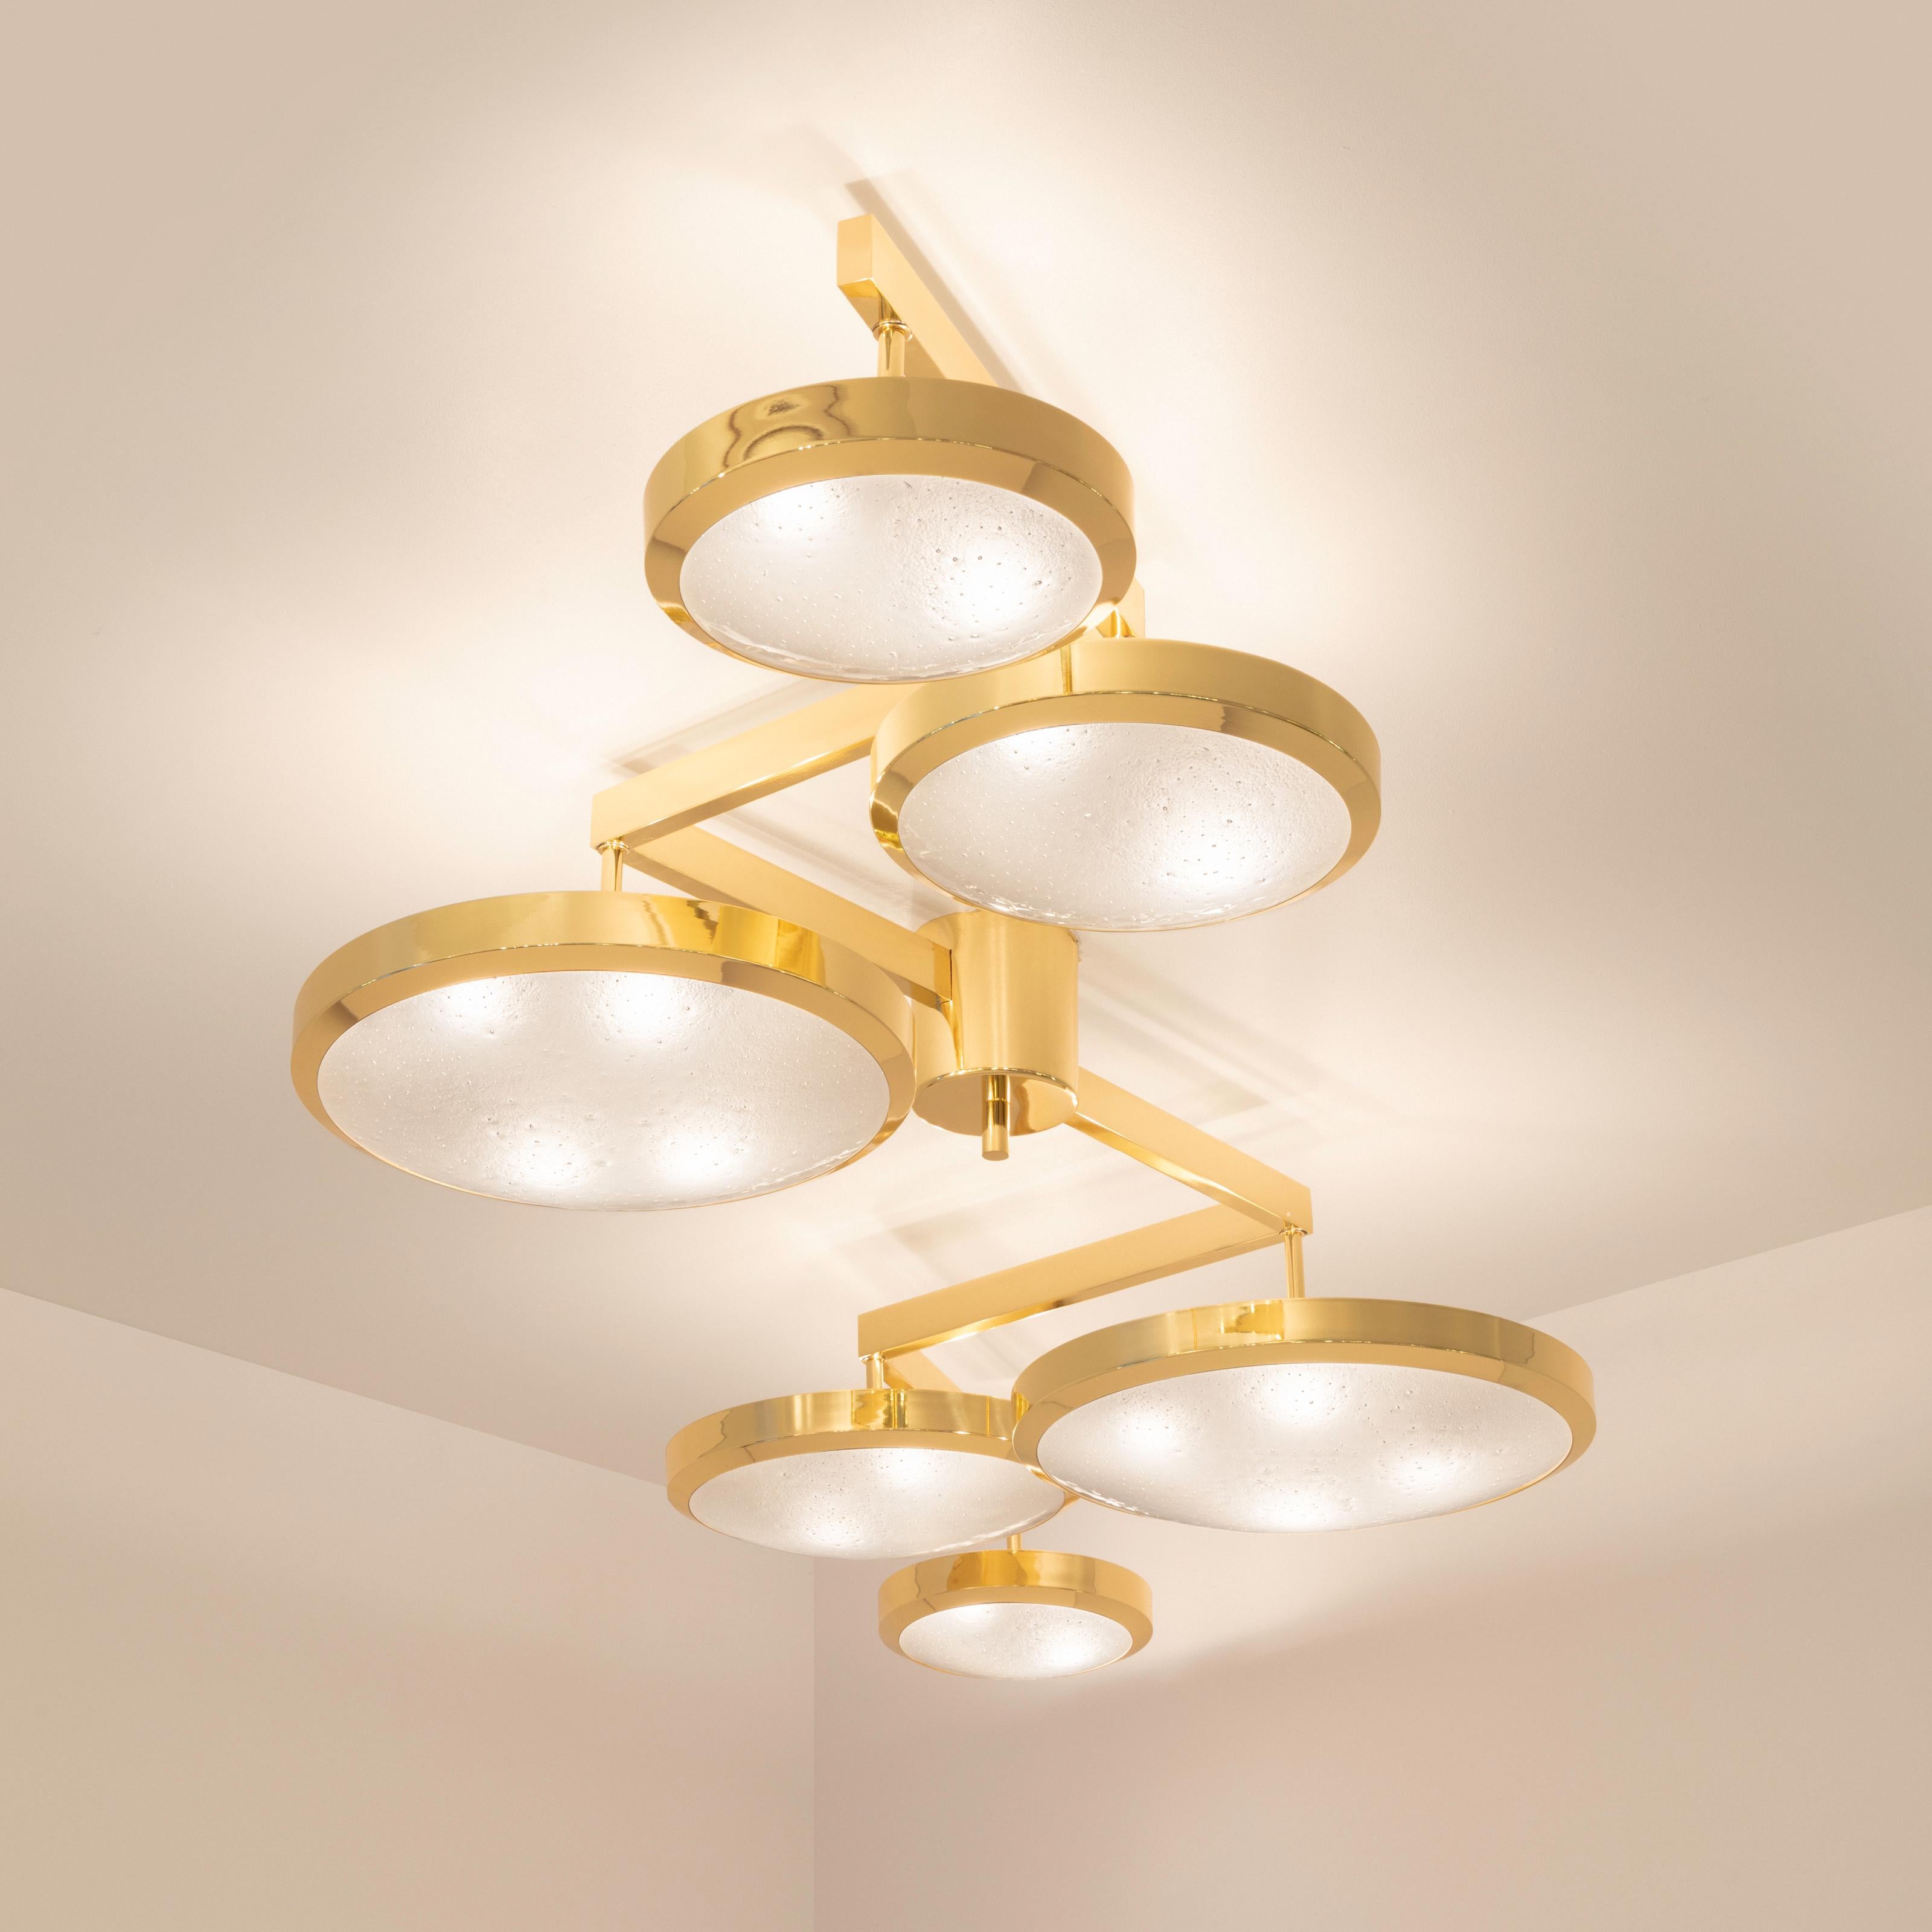 Modern Geometria Sospesa Ceiling Light by Gaspare Asaro-Polished Nickel Finish For Sale